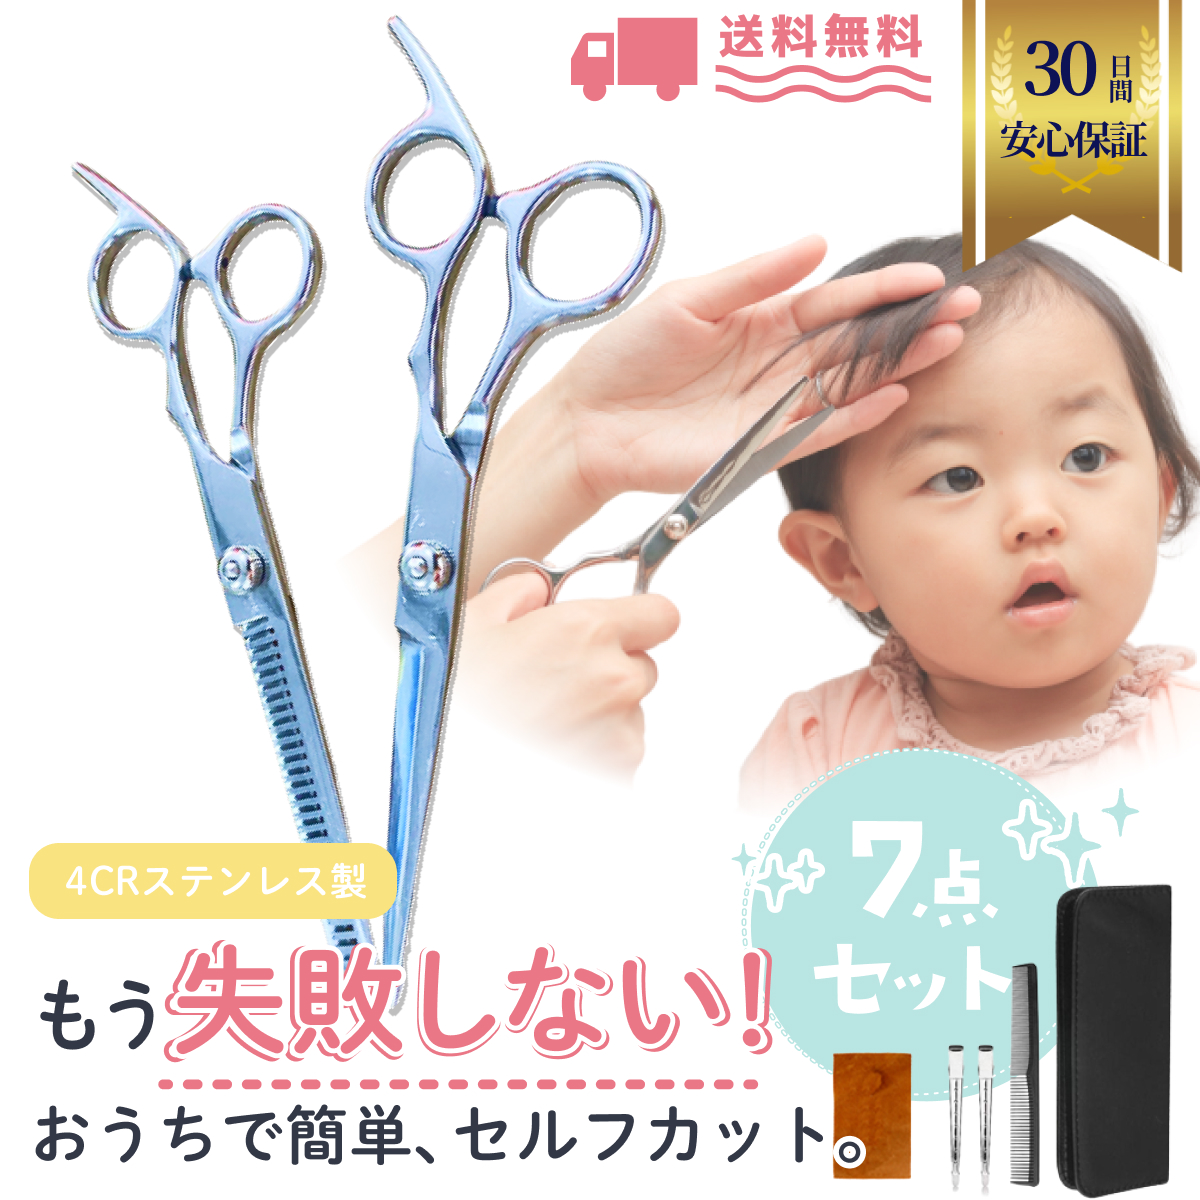 . for hairs tongs ..basami scissors for hairs self cut hair cut gorgeous 7 point set hair cut for tongs front .